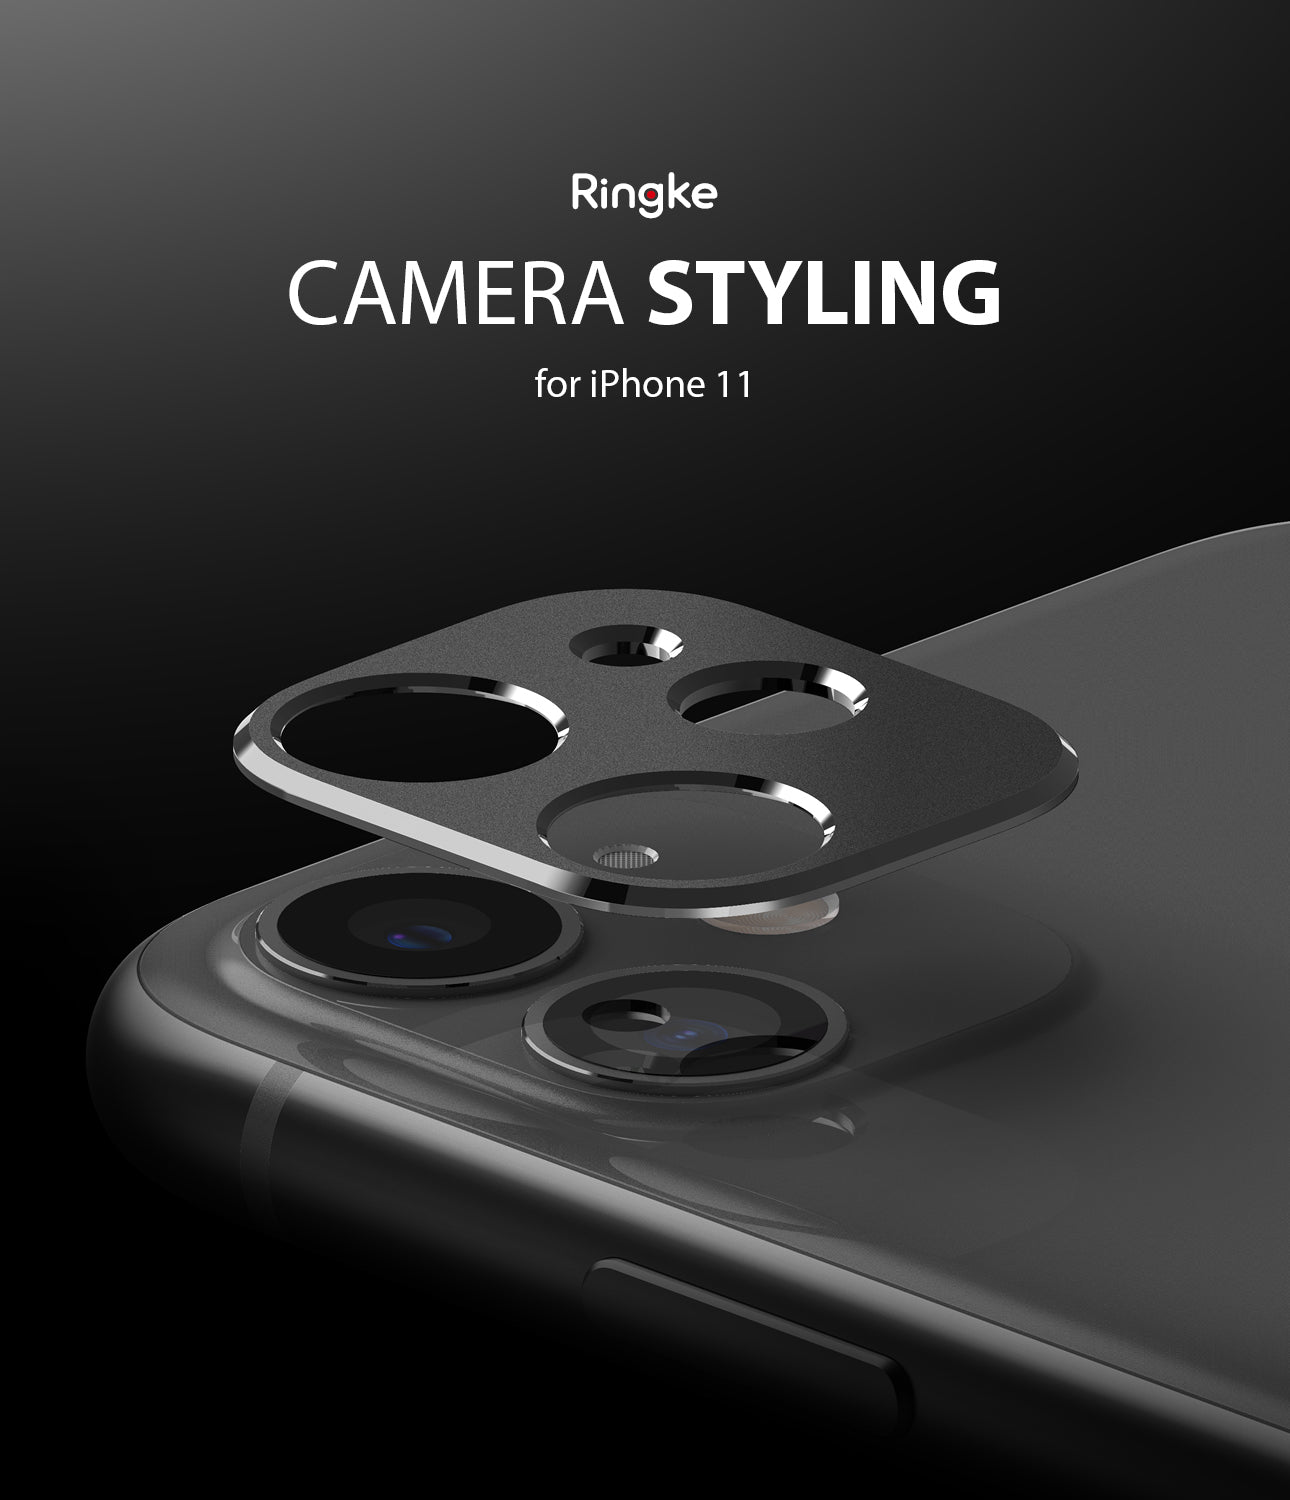 apple iphone 11 camera protector - ringke camera styling 